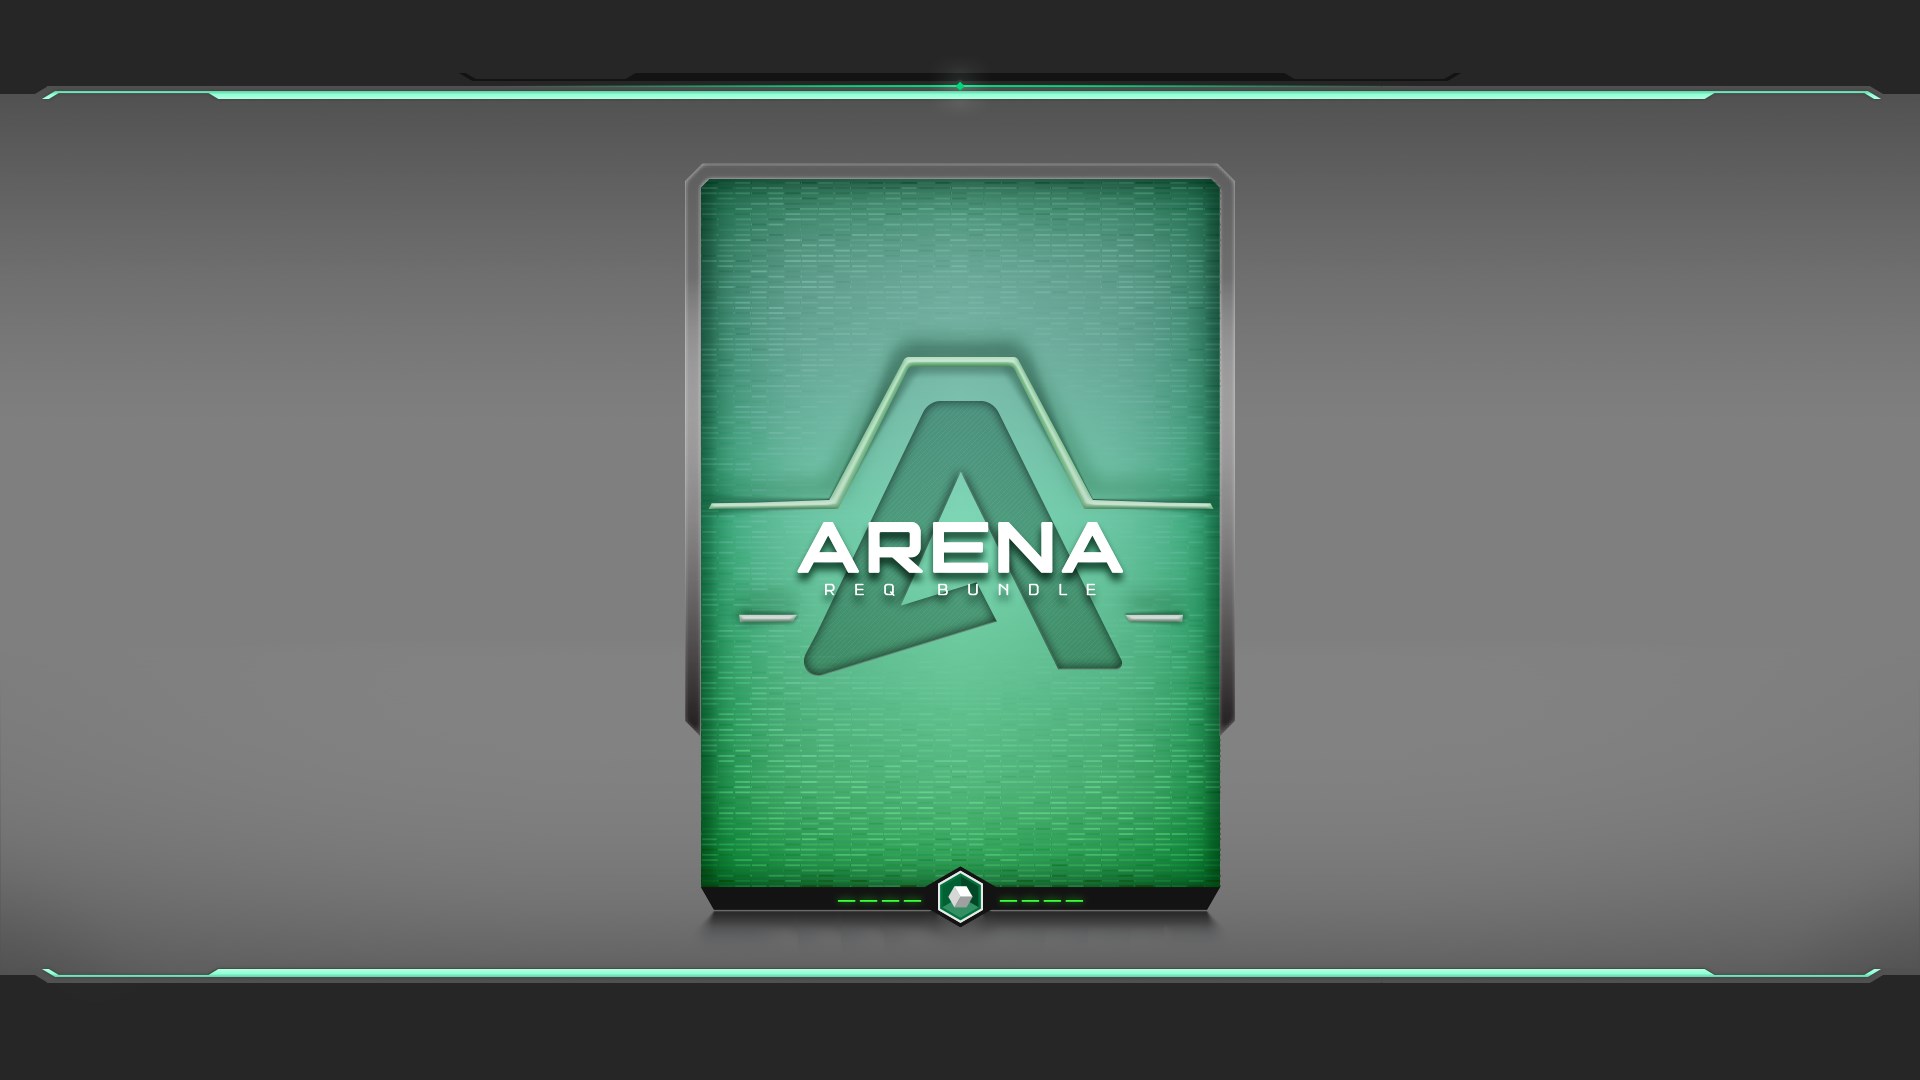 Halo 5 Guardians - Arena REQ Bundle DLC EU XBOX One CD Key $26.55